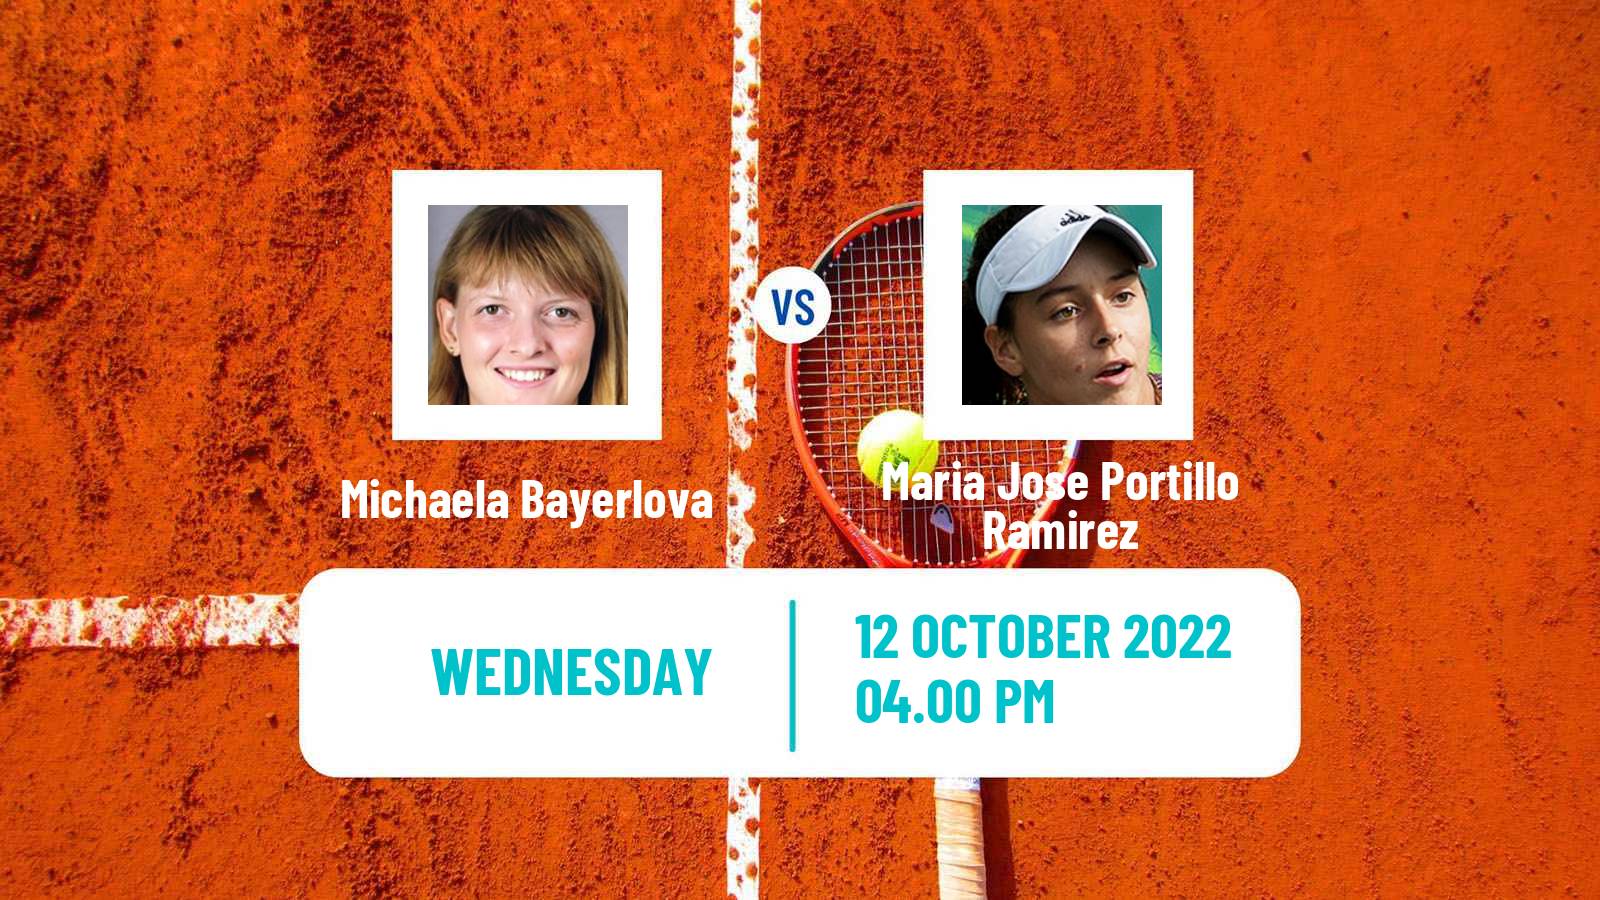 Tennis ITF Tournaments Michaela Bayerlova - Maria Jose Portillo Ramirez